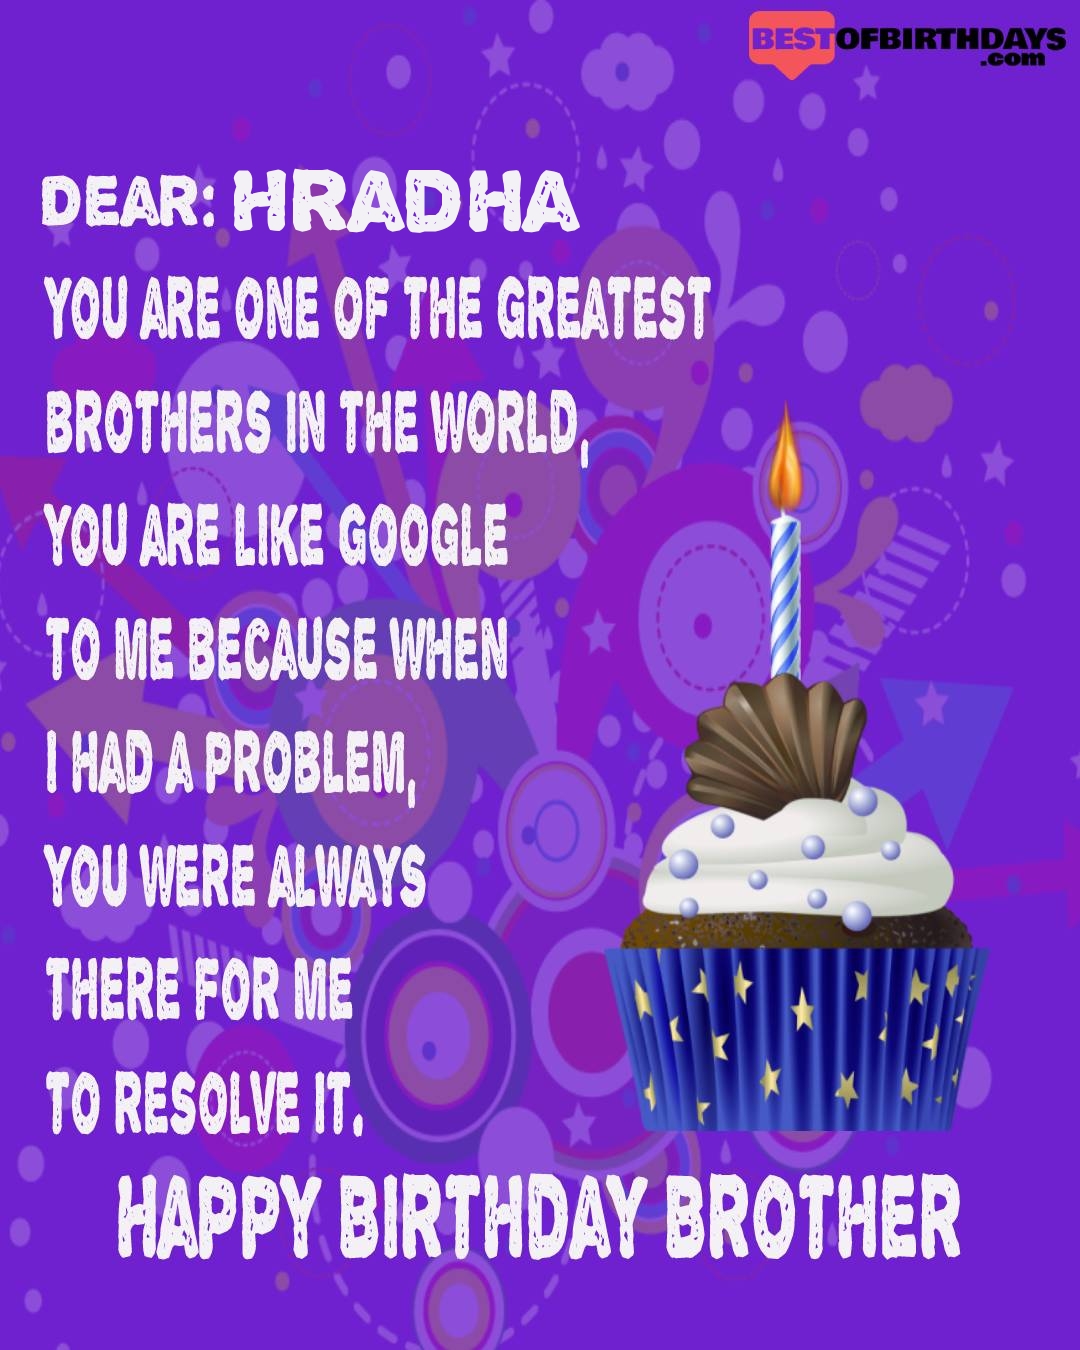 Happy birthday hradha bhai brother bro